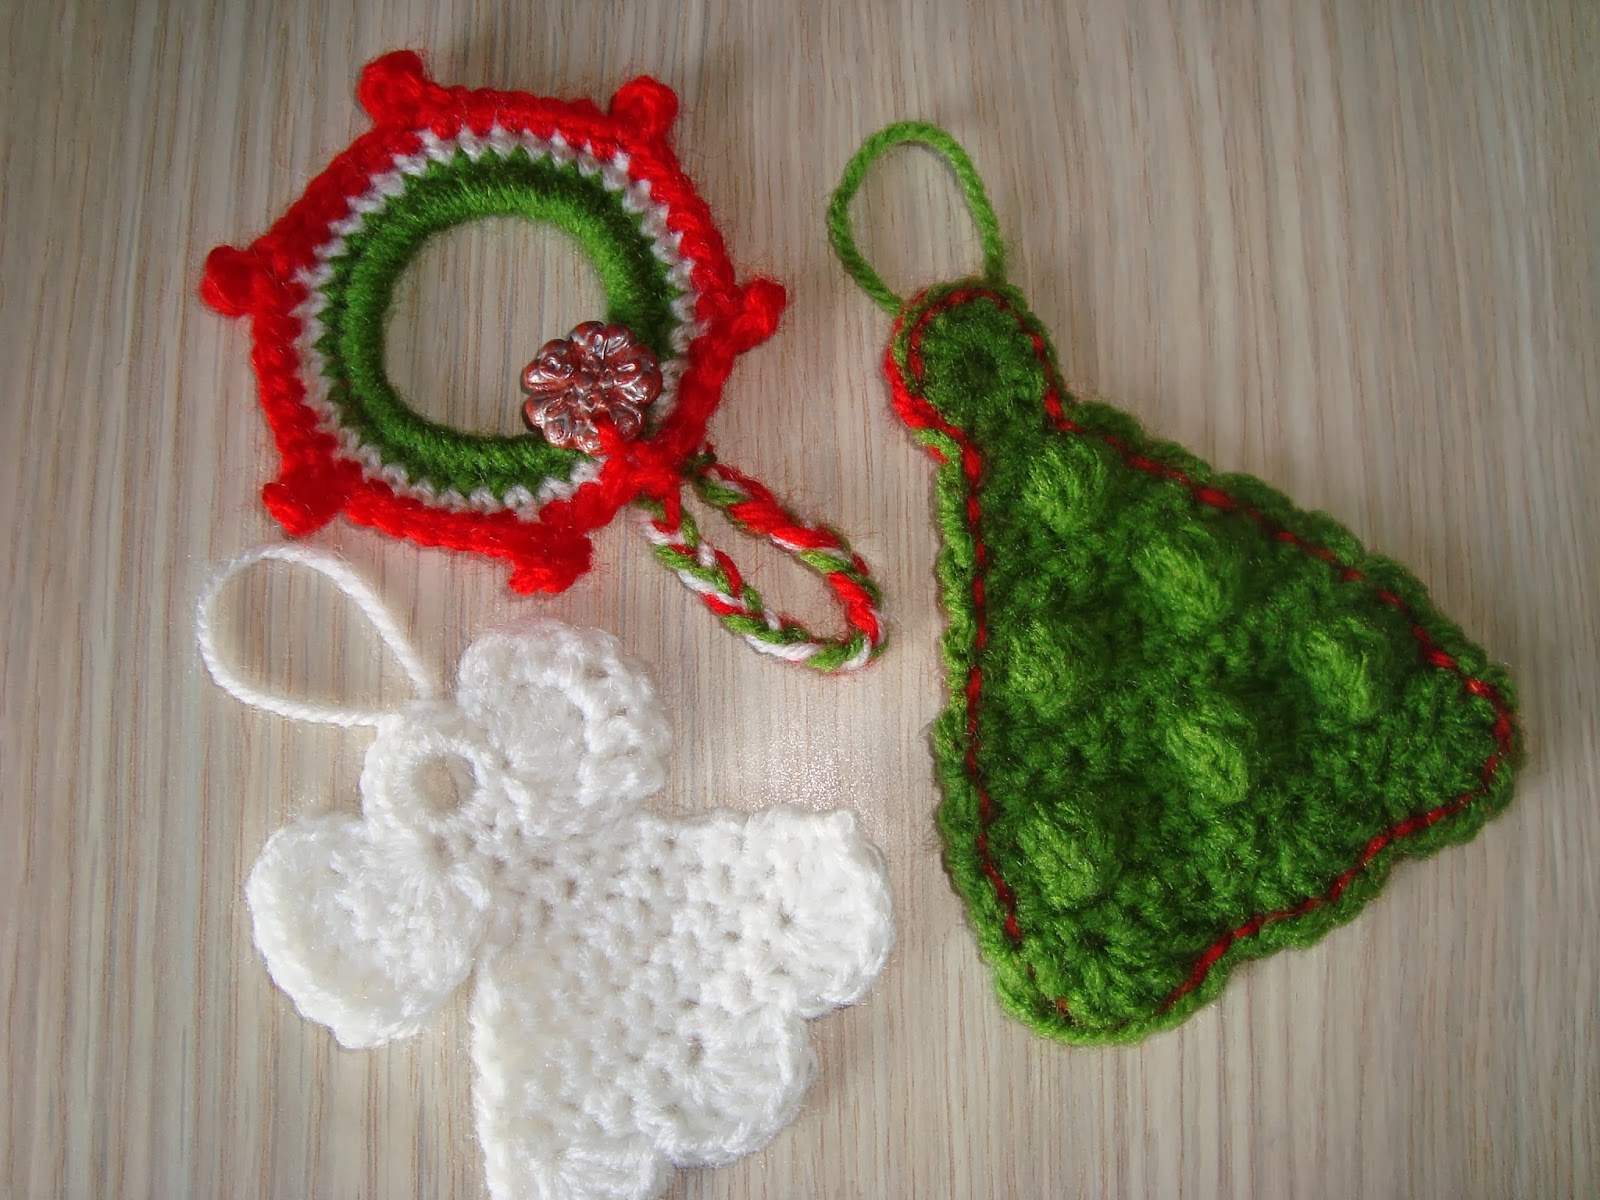 Crochet Christmas Ornament Patterns Handmade Camelia Pattern Three Ornaments Crocheted For Christmas